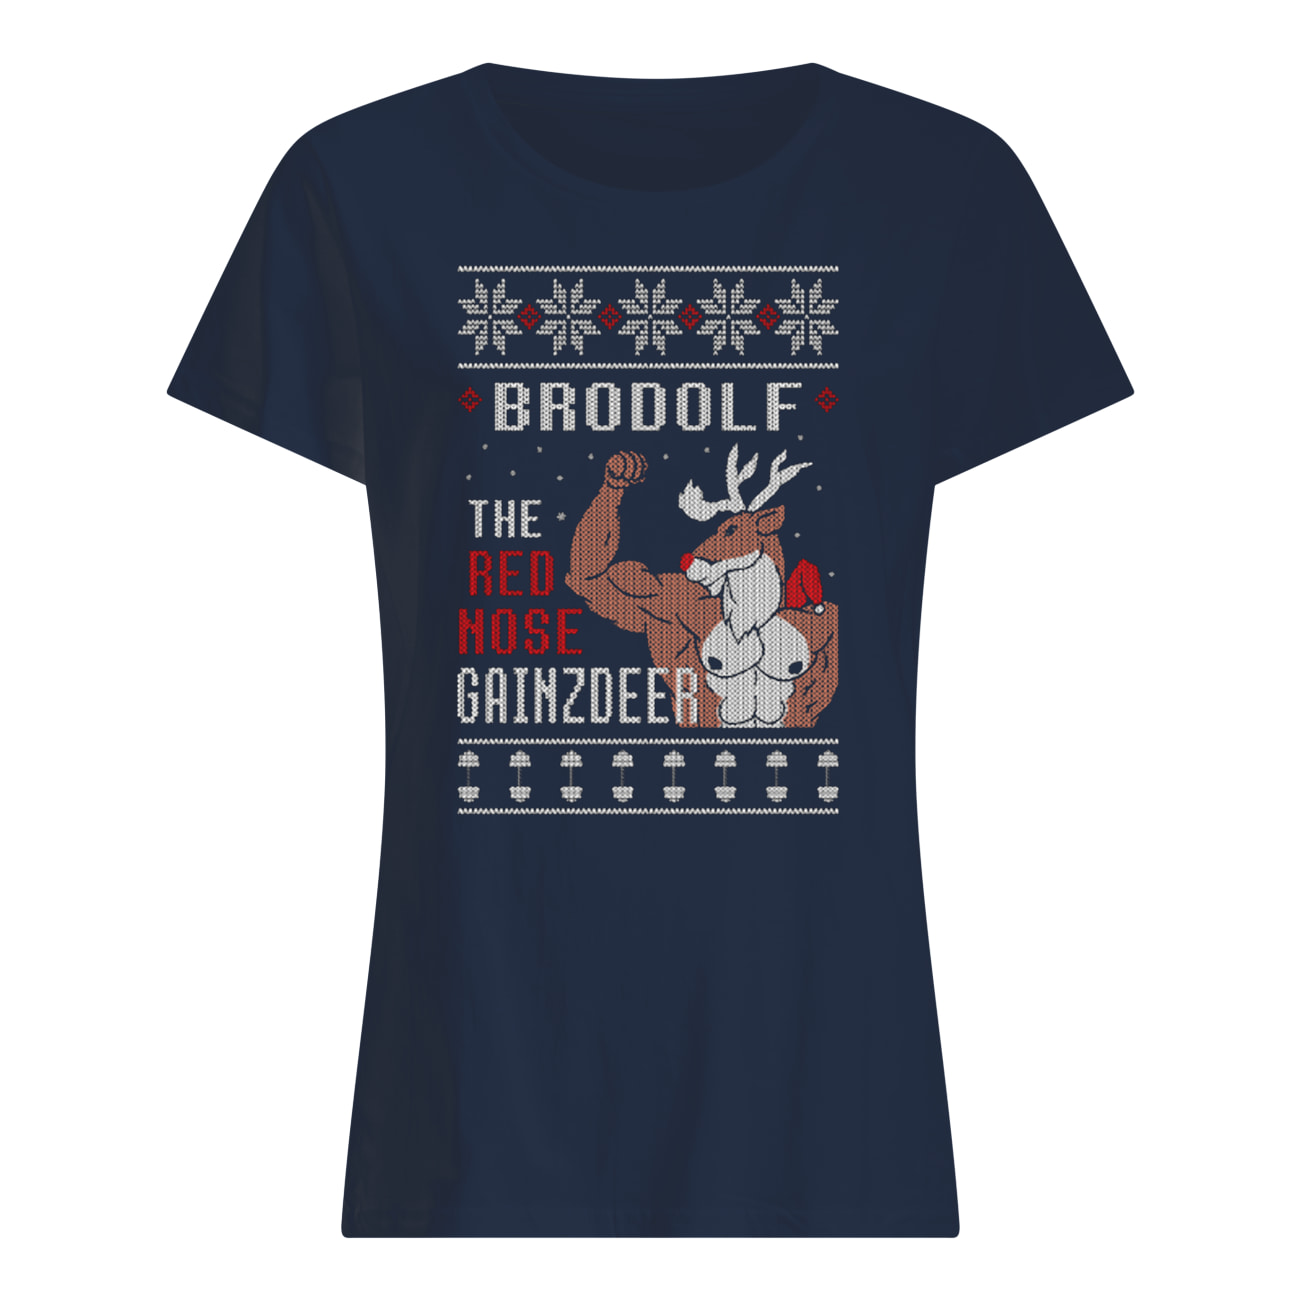 Brodolf the rednose gainzdeer ugly christmas womens shirt